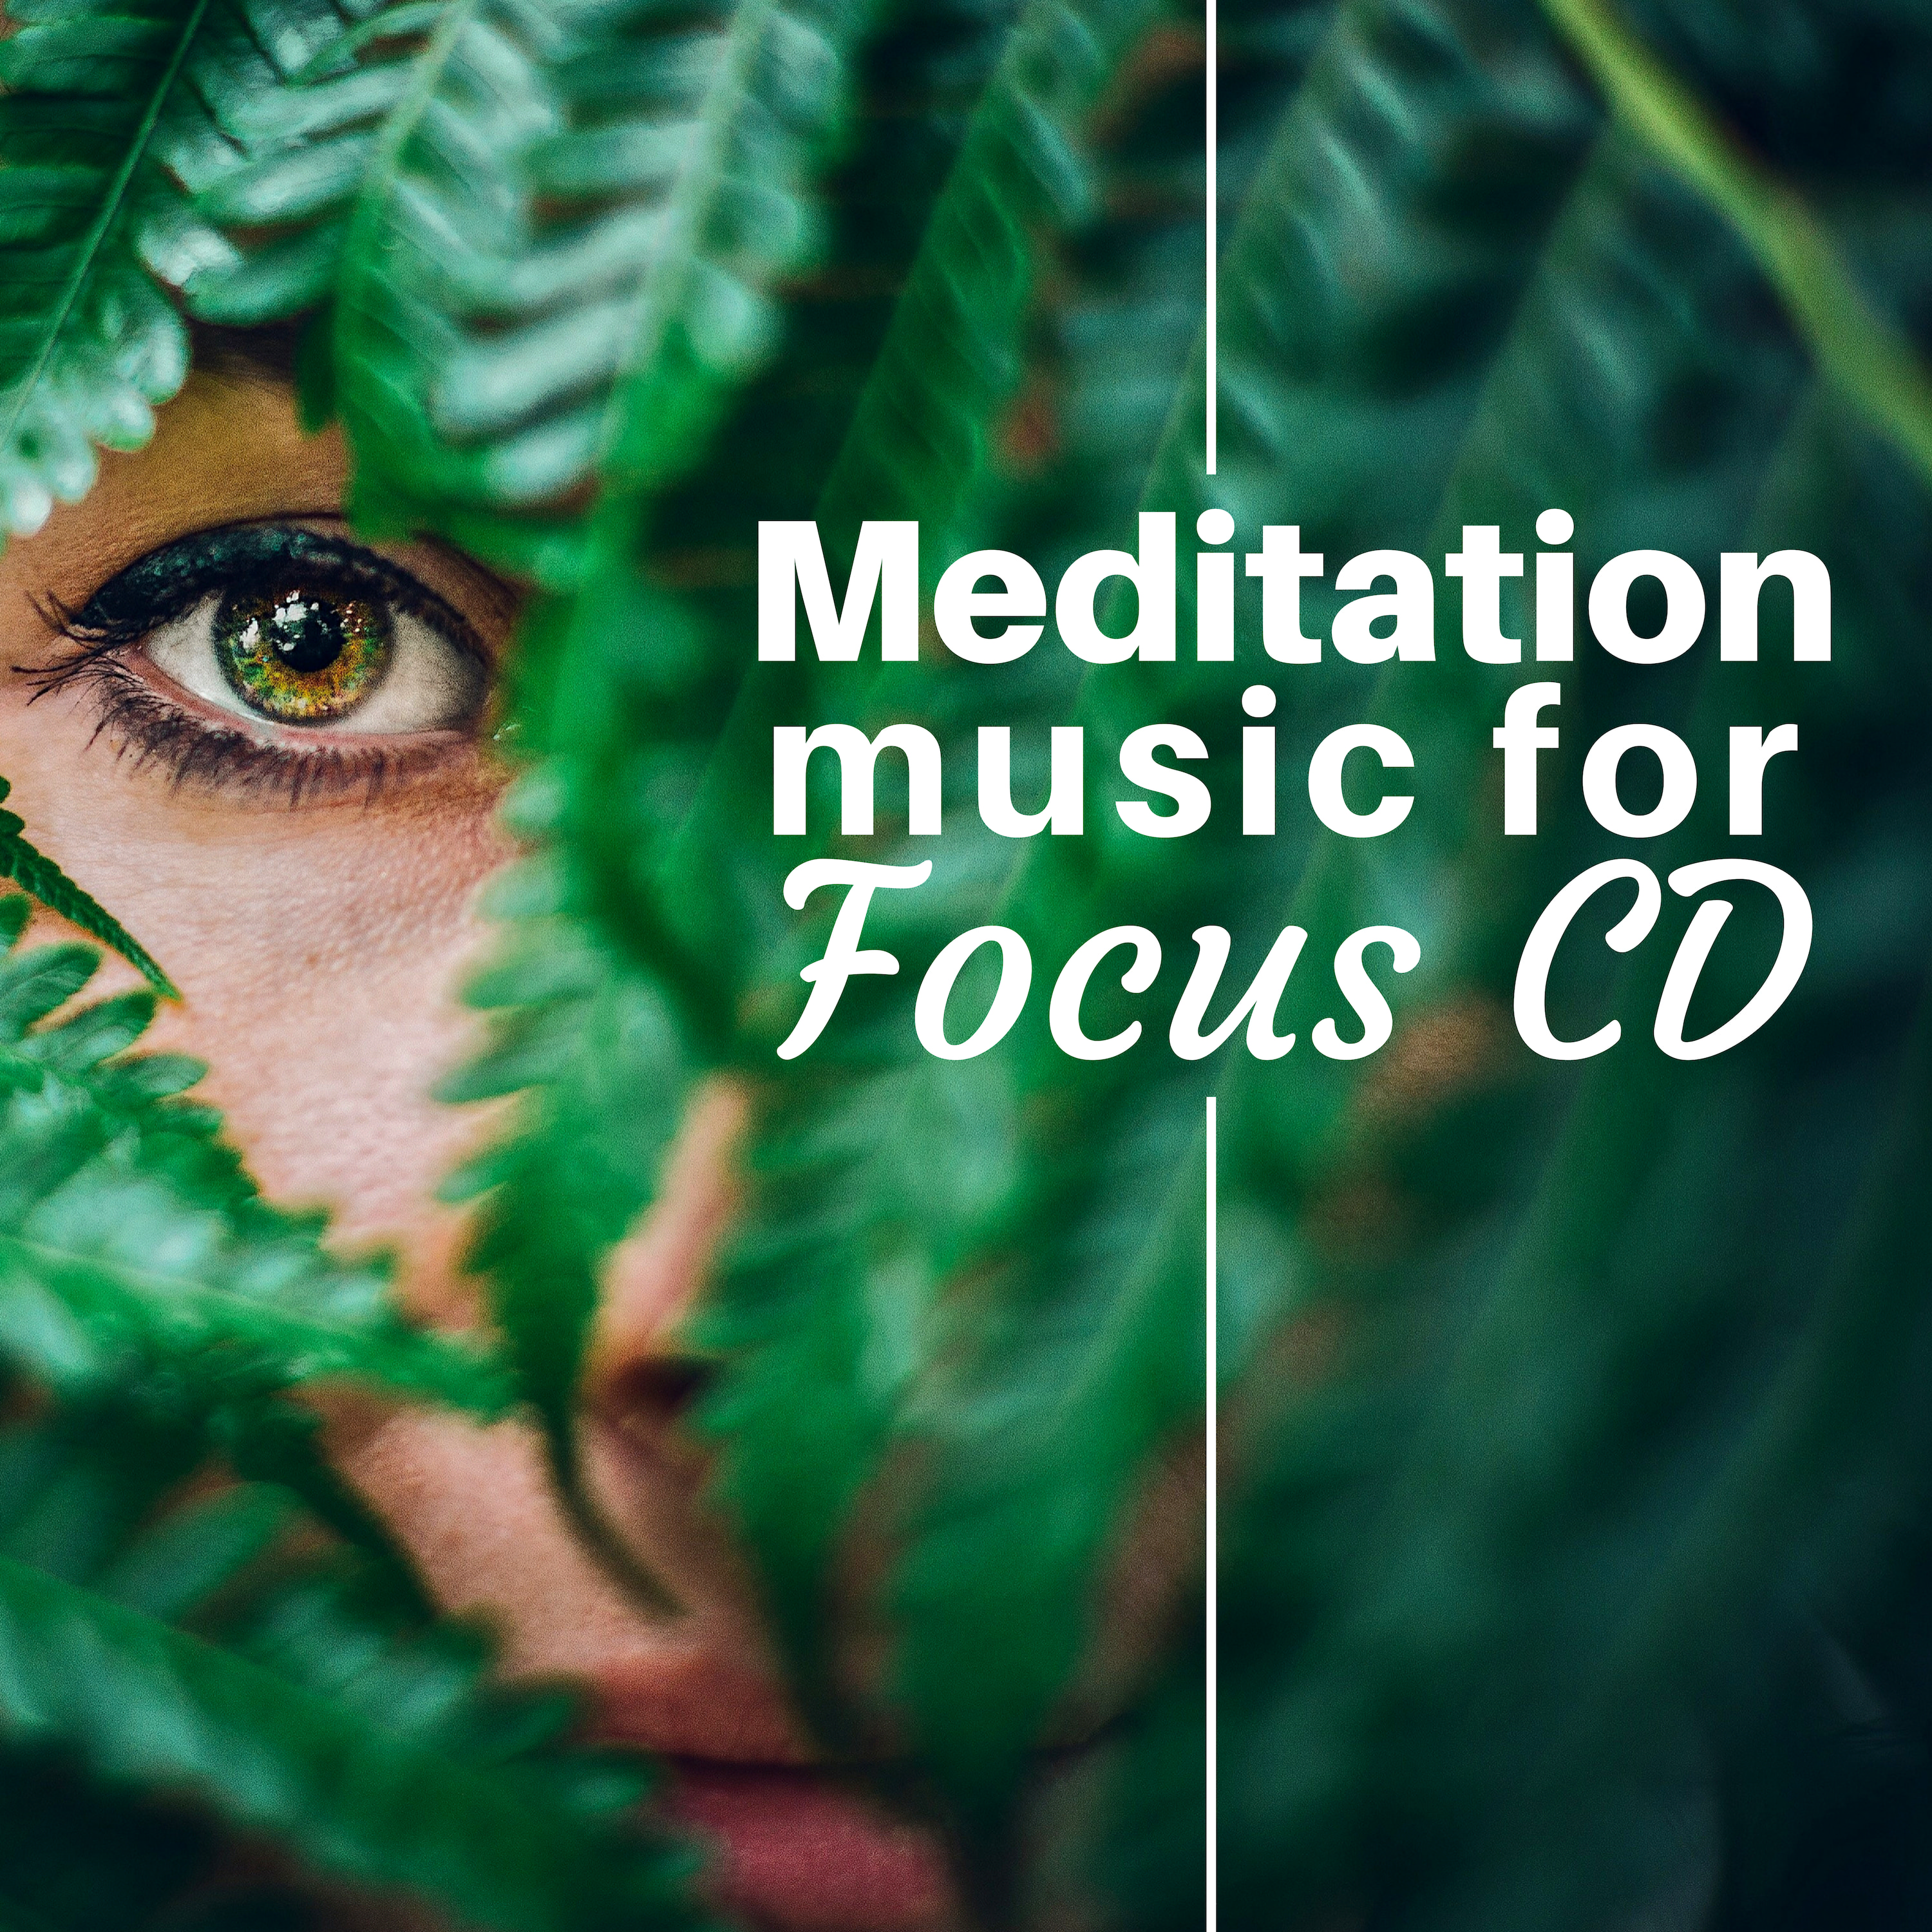 Meditation Music for Focus CD - Relax, Release, Rebalance